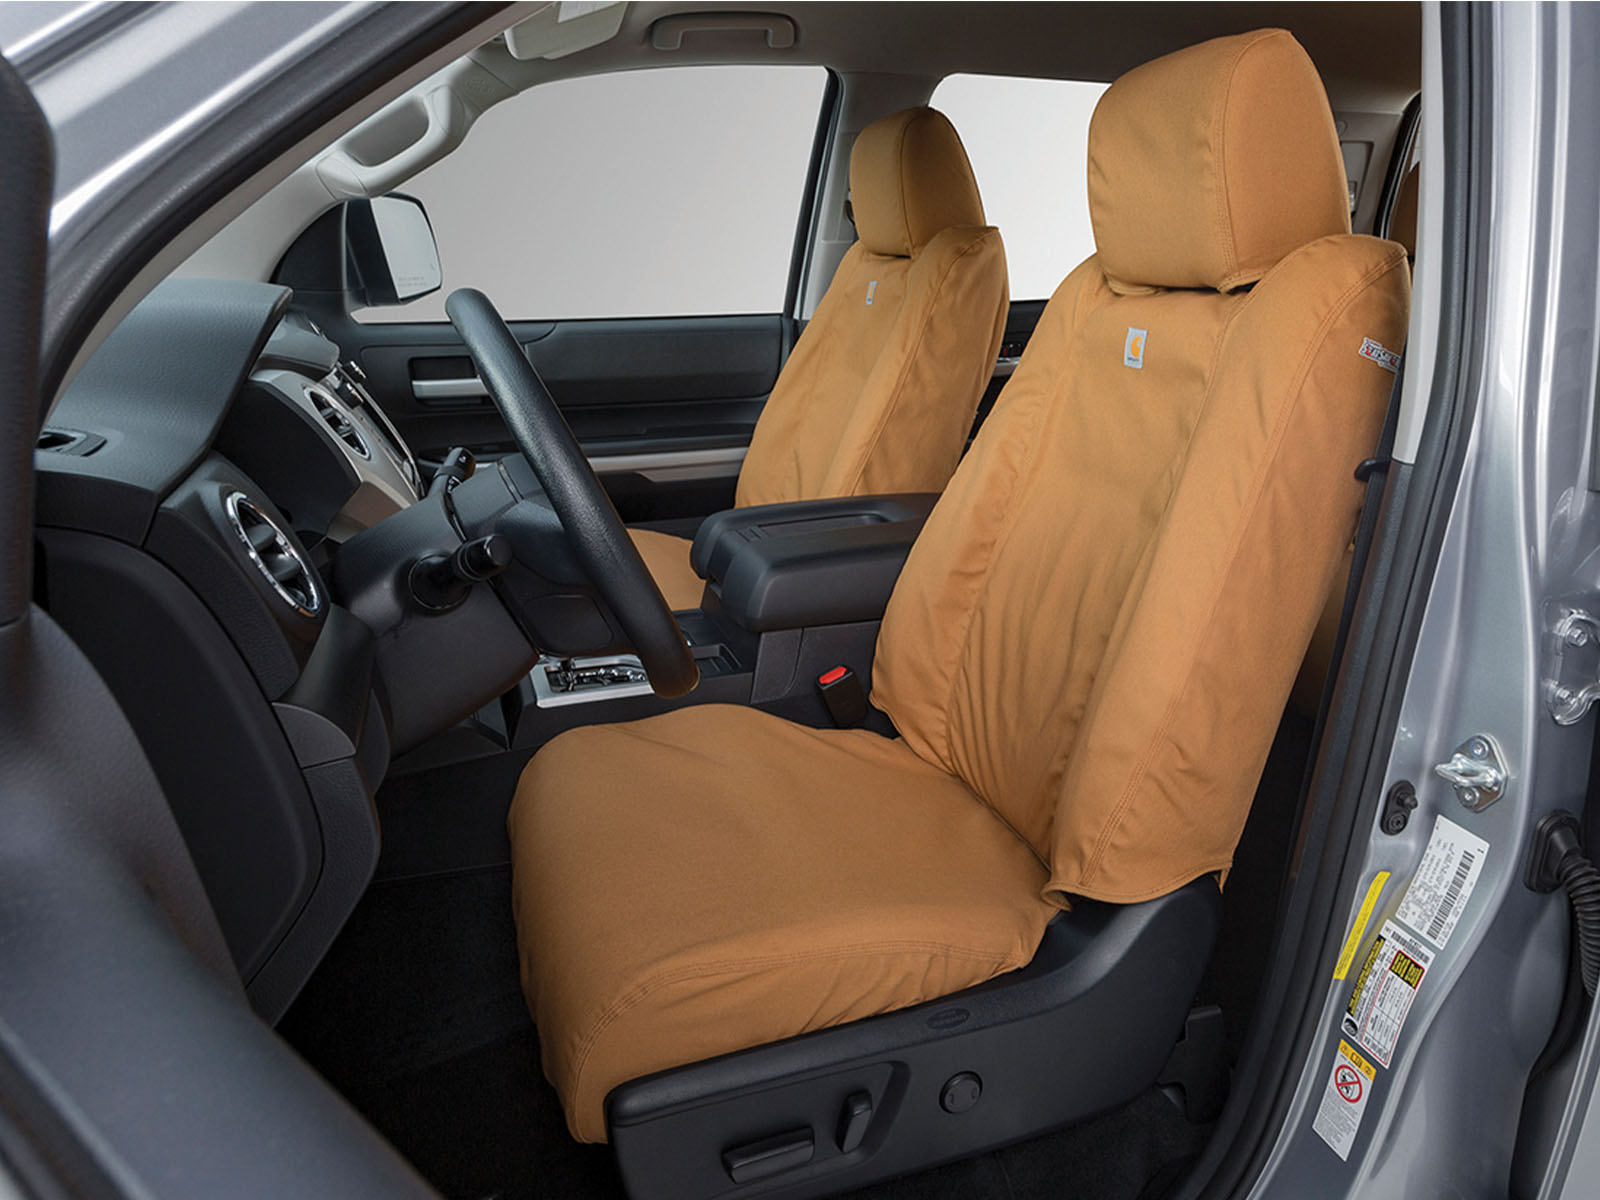 2018 Toyota Tundra Seat Covers Realtruck - 2018 Toyota Tundra Waterproof Seat Covers